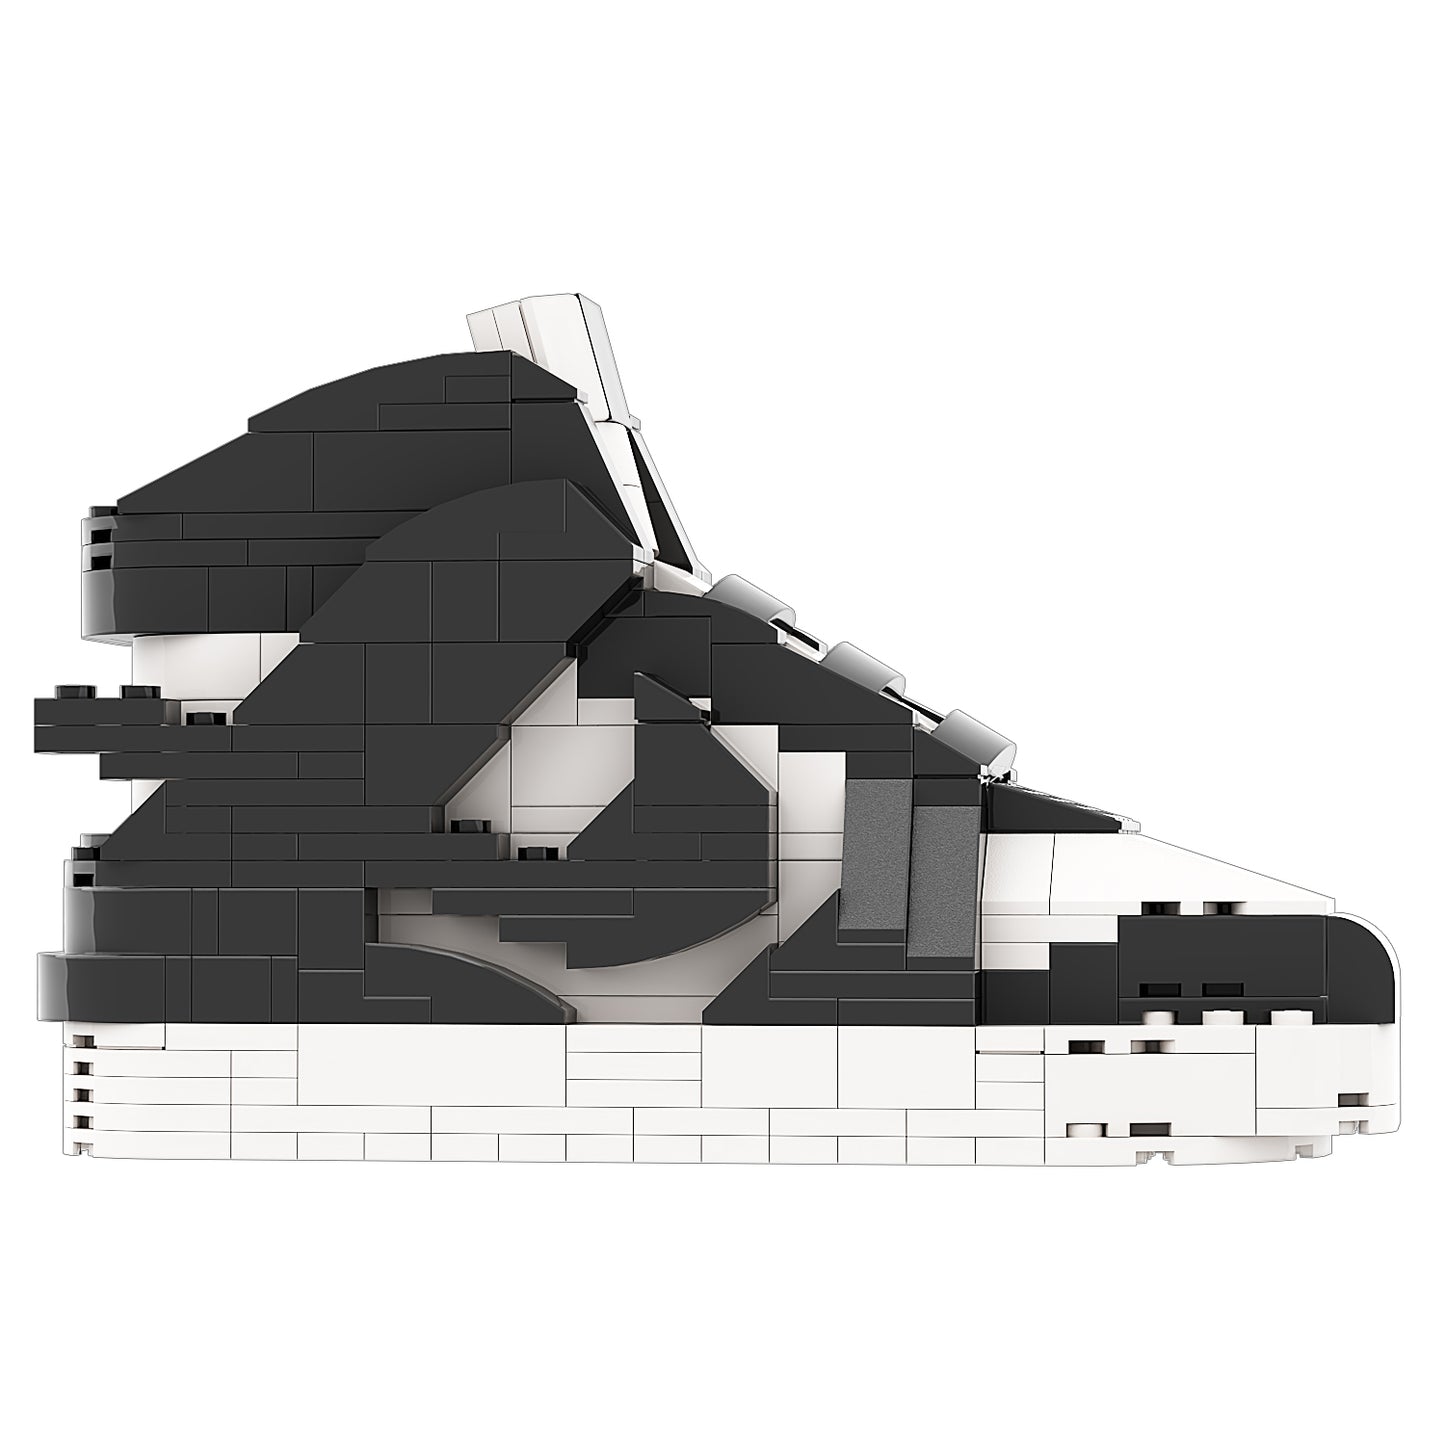 REGULAR "Dunk High Ambush" Sneaker Bricks with Mini Figure